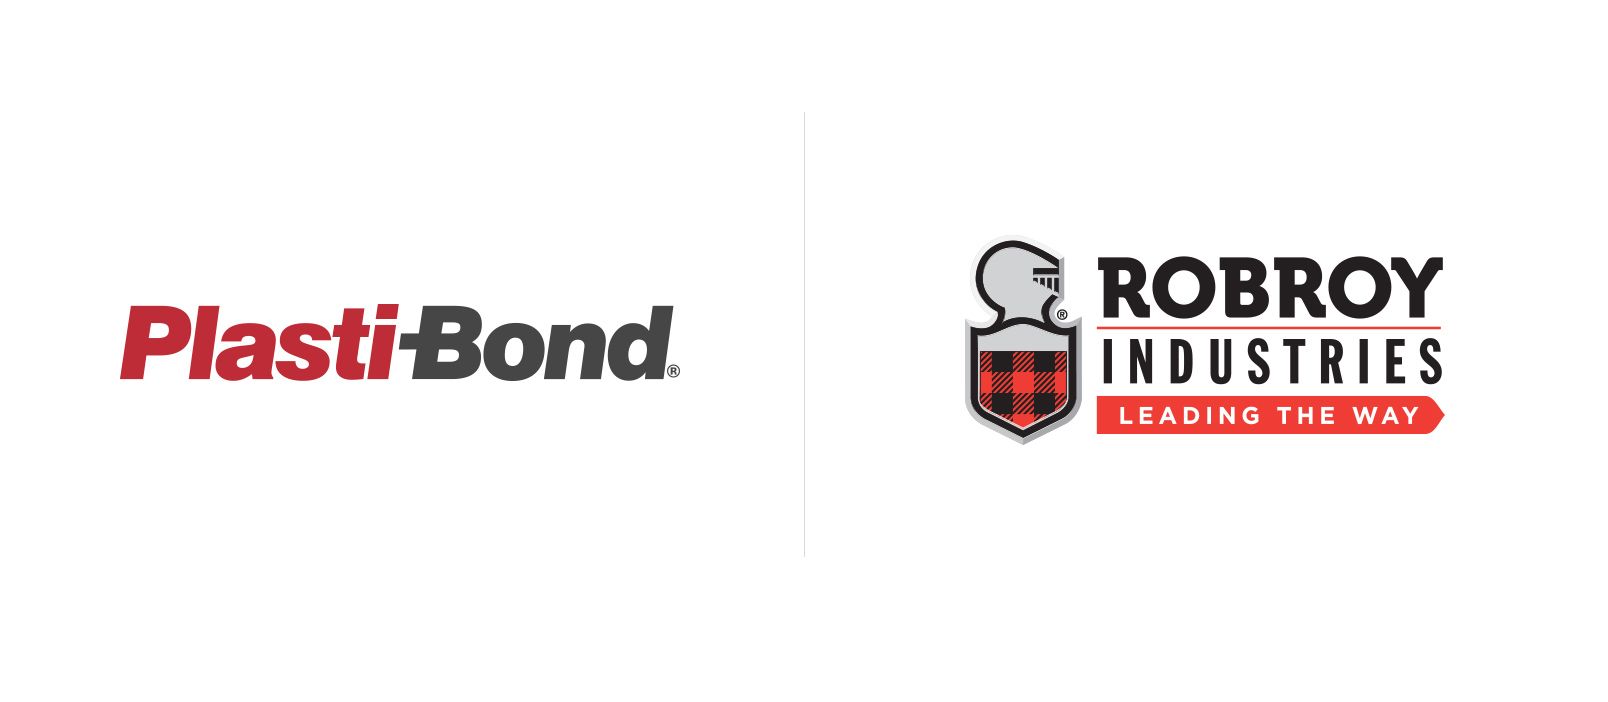 PB and Robroy Logos